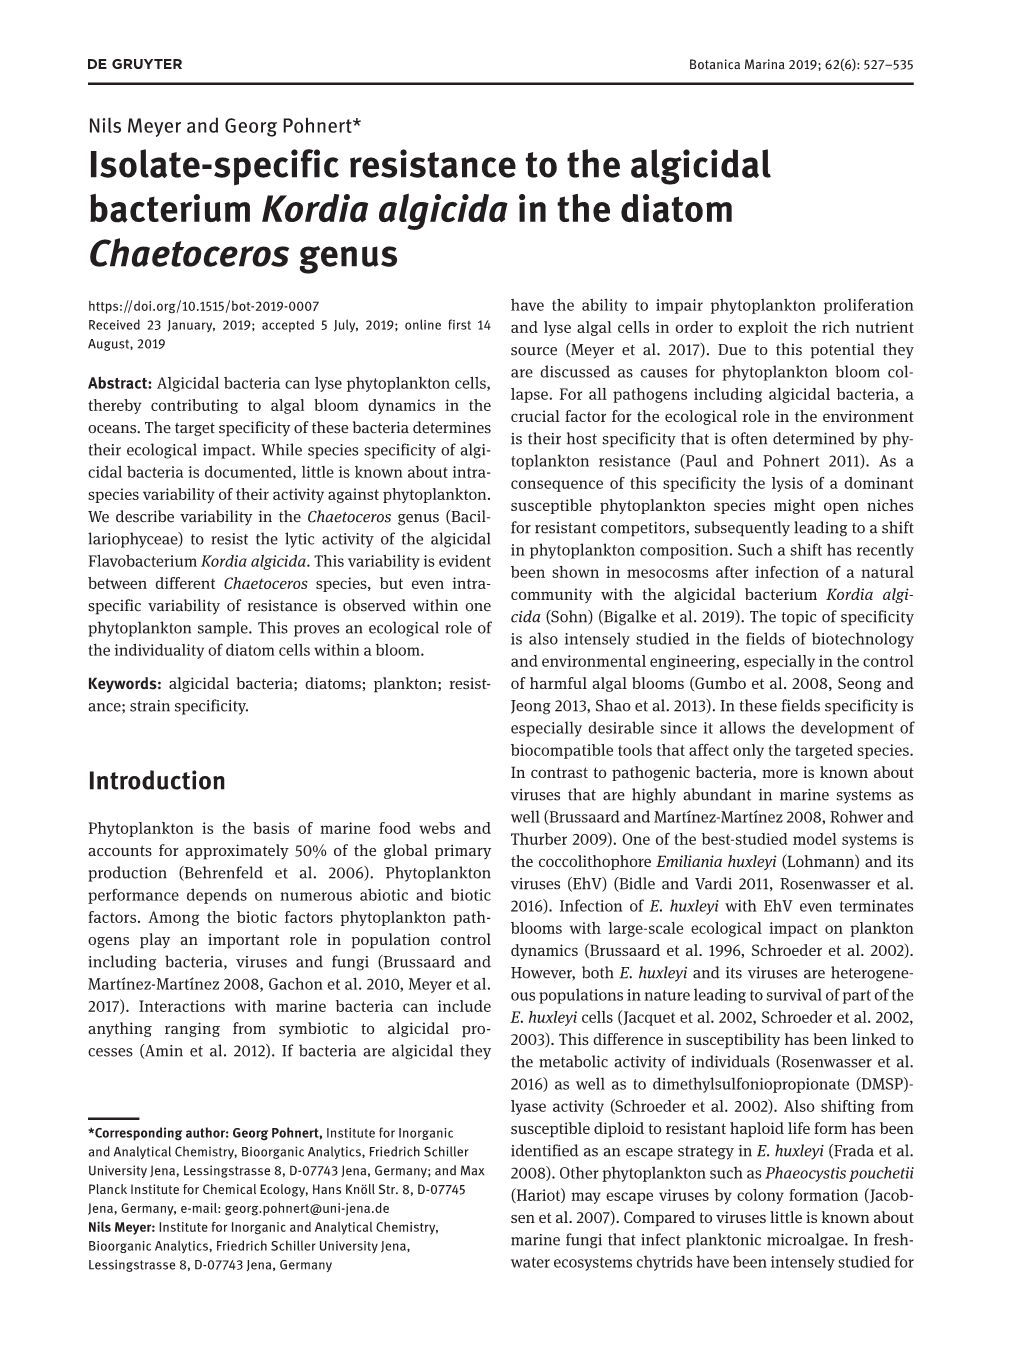 Isolate-Specific Resistance to the Algicidal Bacterium Kordia Algicida